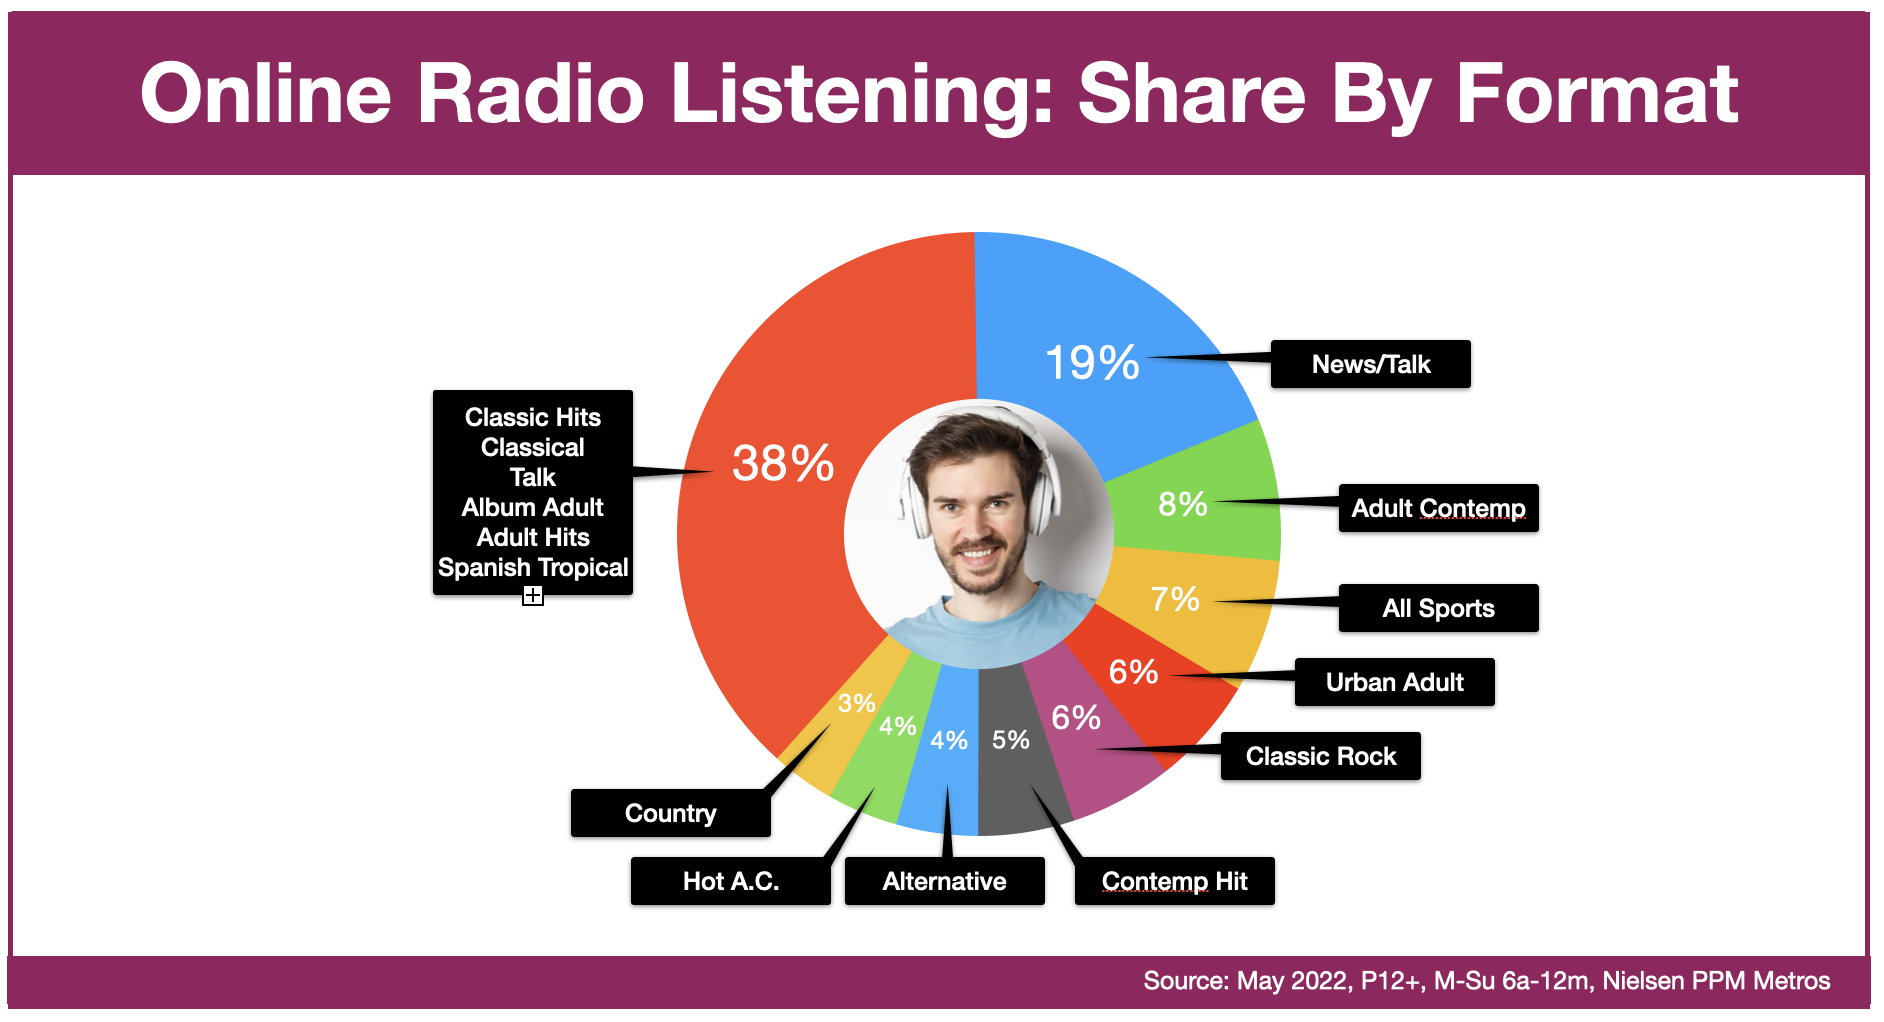 Advertise In Augusta: Online Radio Listening By Format